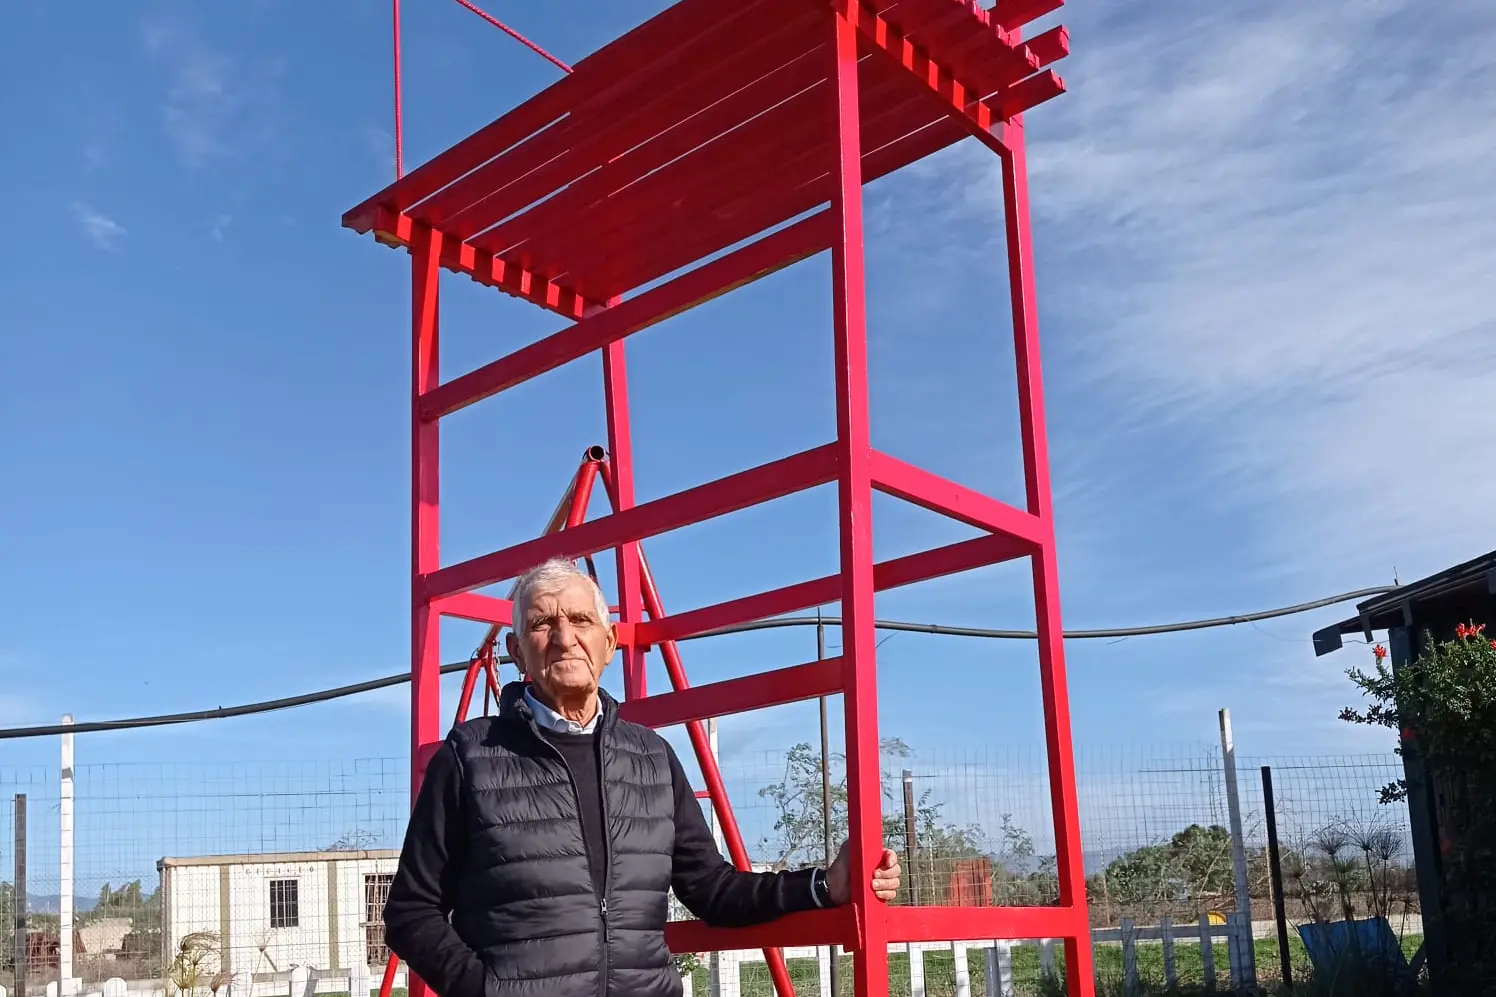 Pietro Cogoni e la panchina rossa alta tre metri (foto Lai)